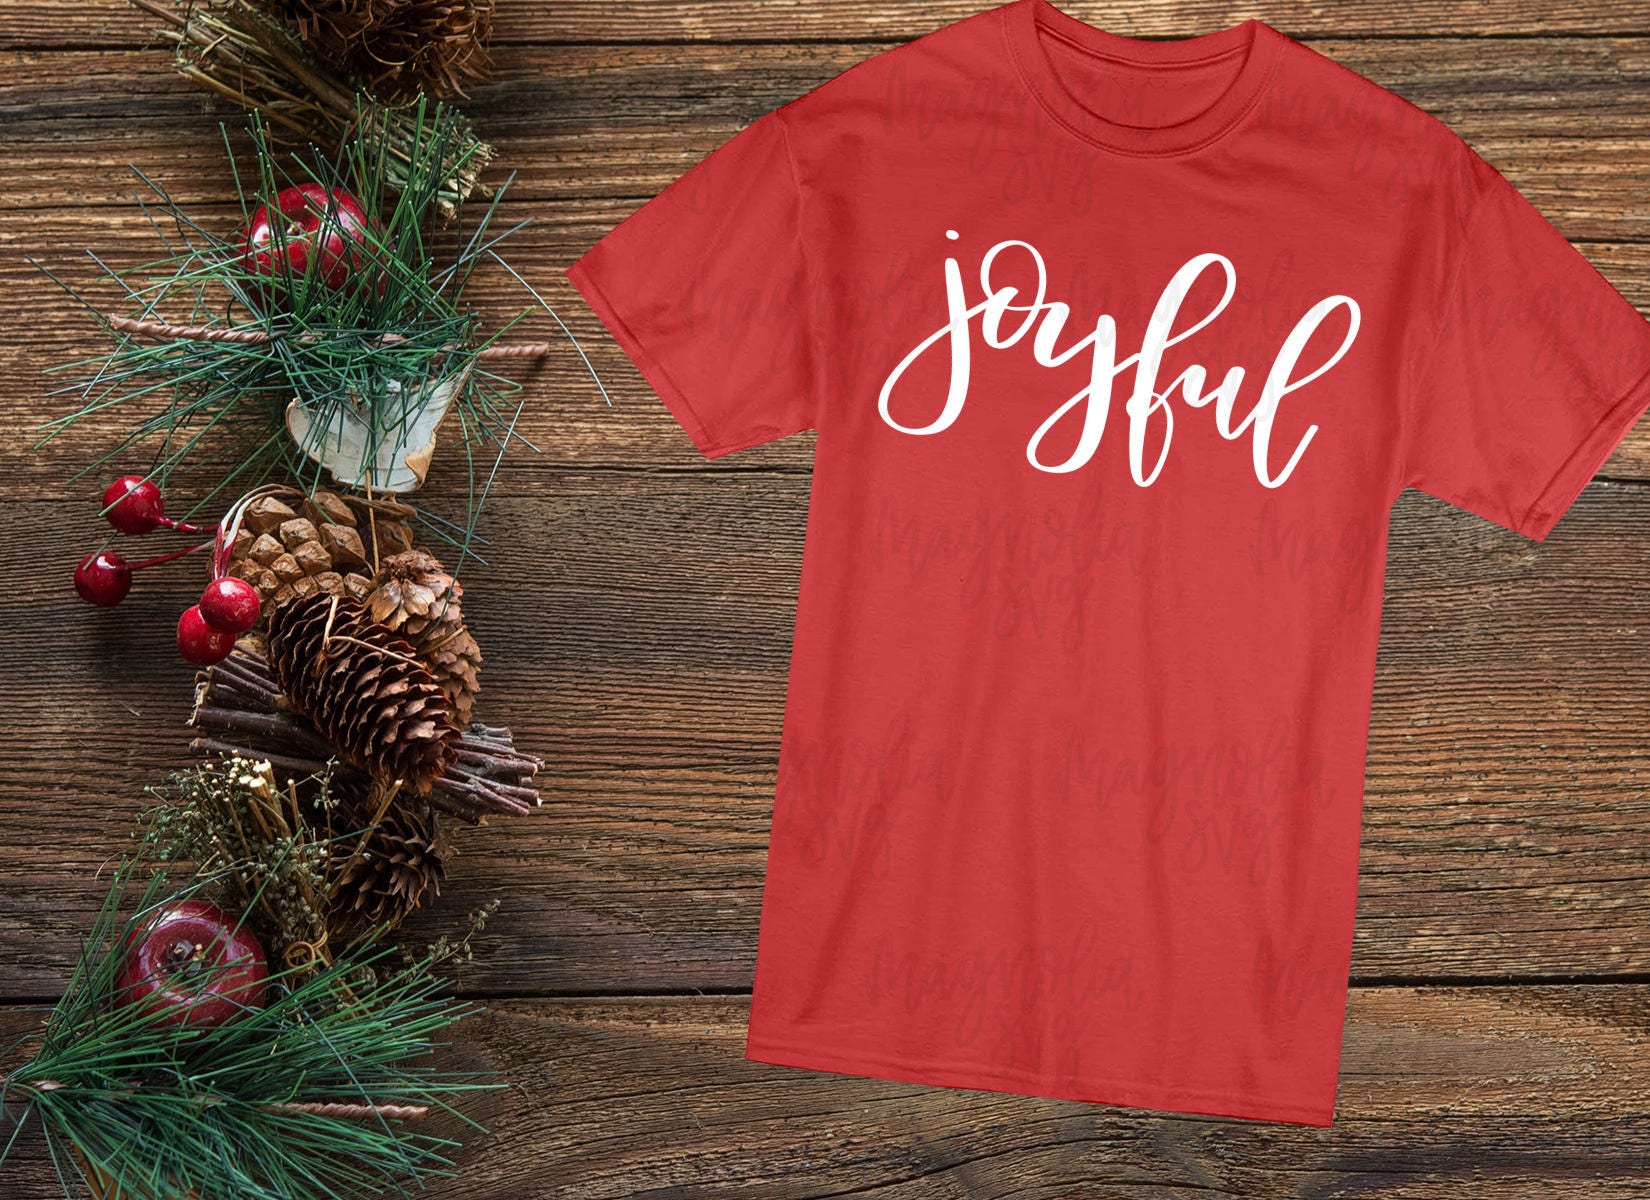 Download Joyful svg Joyful tshirt svg Joyful shirt svg Christmas